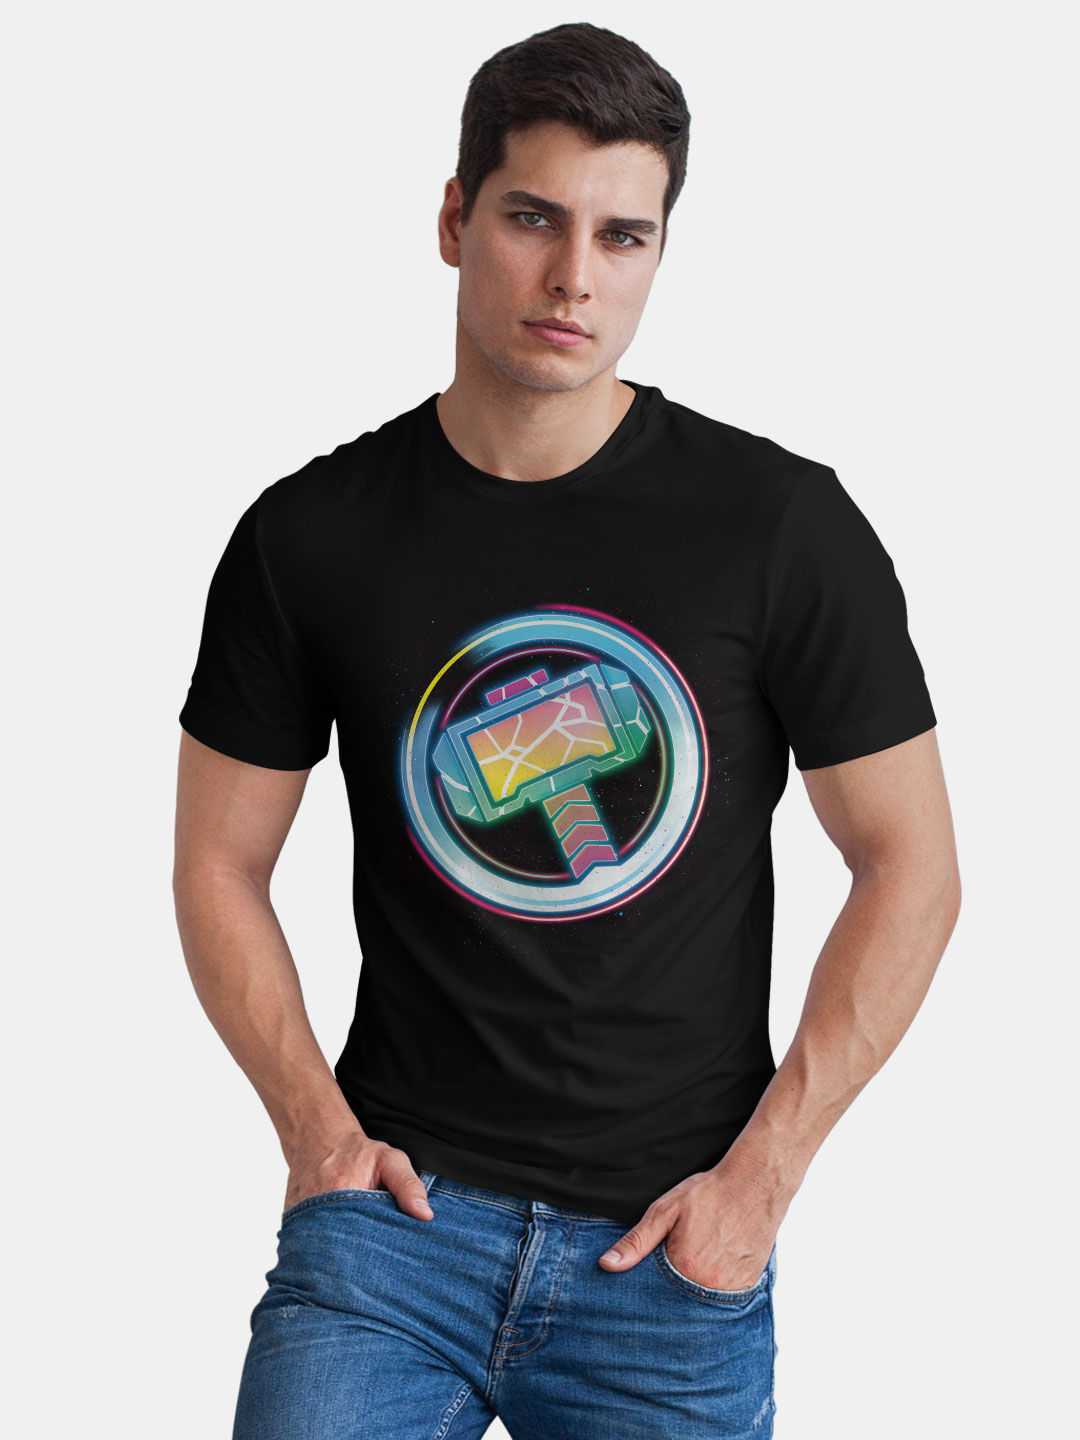 Buy Bifrost Mjolnir - Male Designer T-Shirts T-Shirts Online